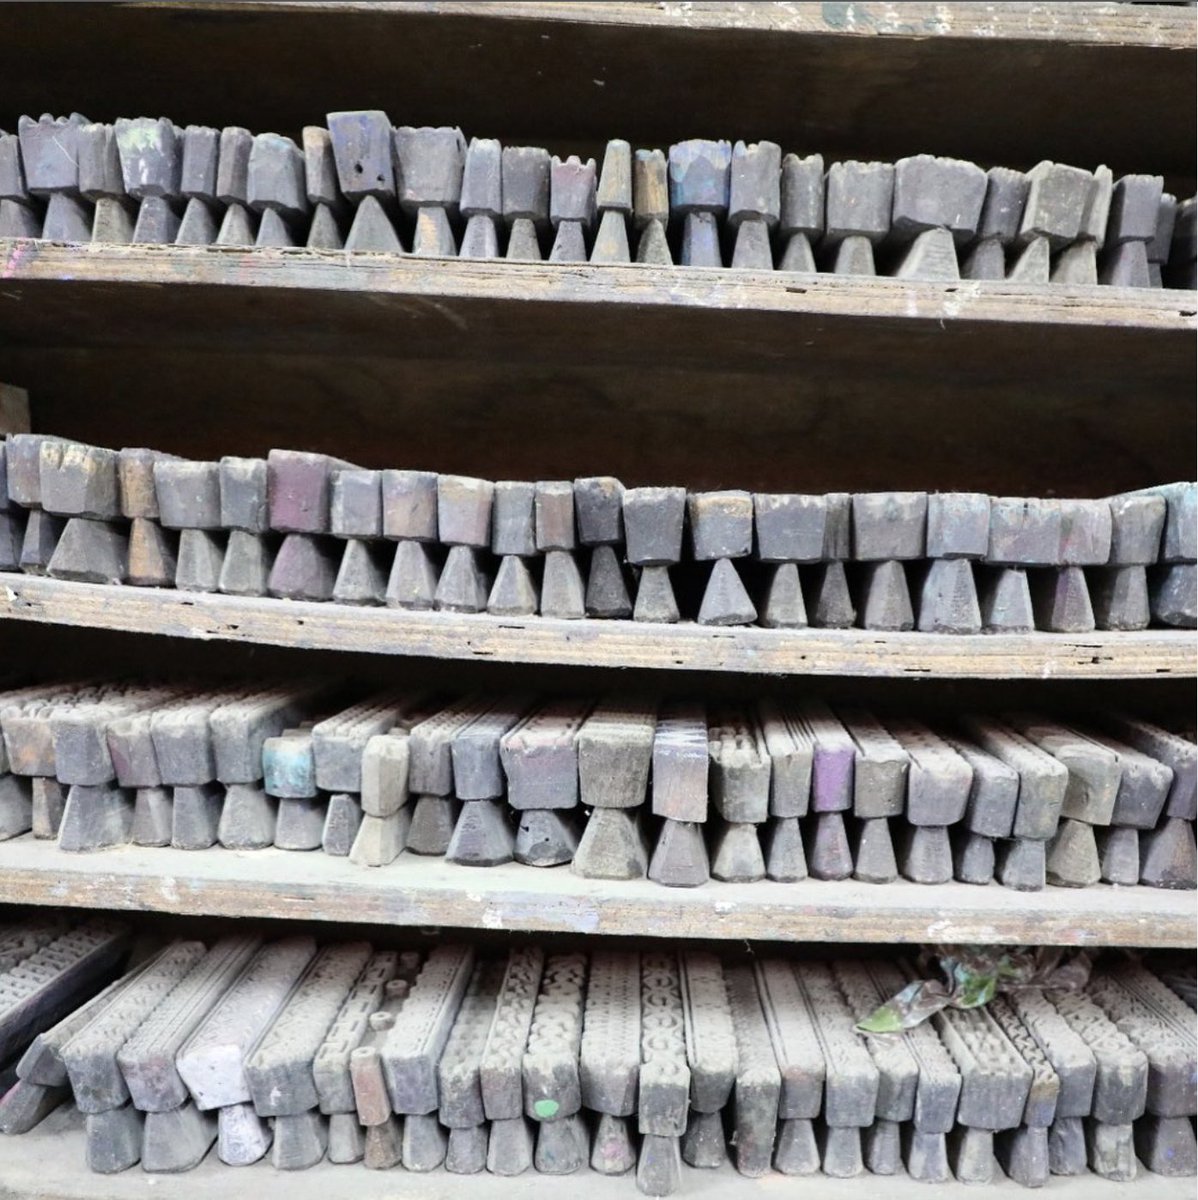 Beauty of wooden blocks #blockprintingonfabric #indianblockprinting #indianblockprint #indianblockprints #indianblockprintfabric #indianblockprintingworkshop #indianblockprinted #woodenblockprint #woodenblockprinting #woodenblocks #woodenblockstamps #woodenblockprints #block